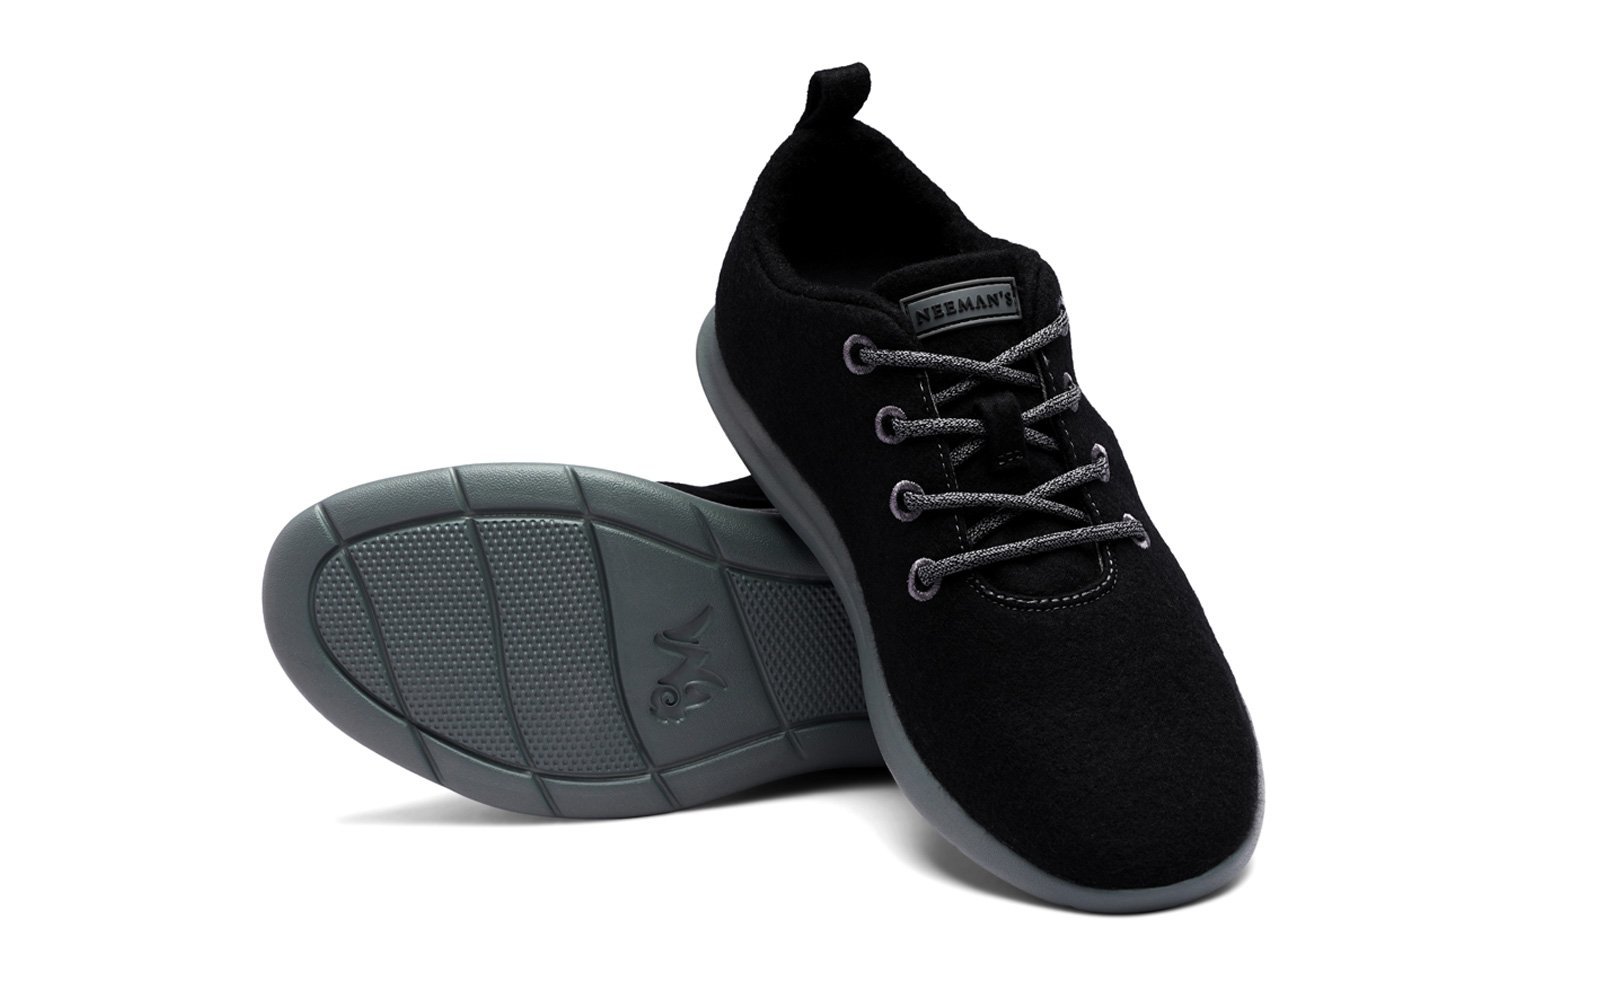 black joggers shoes